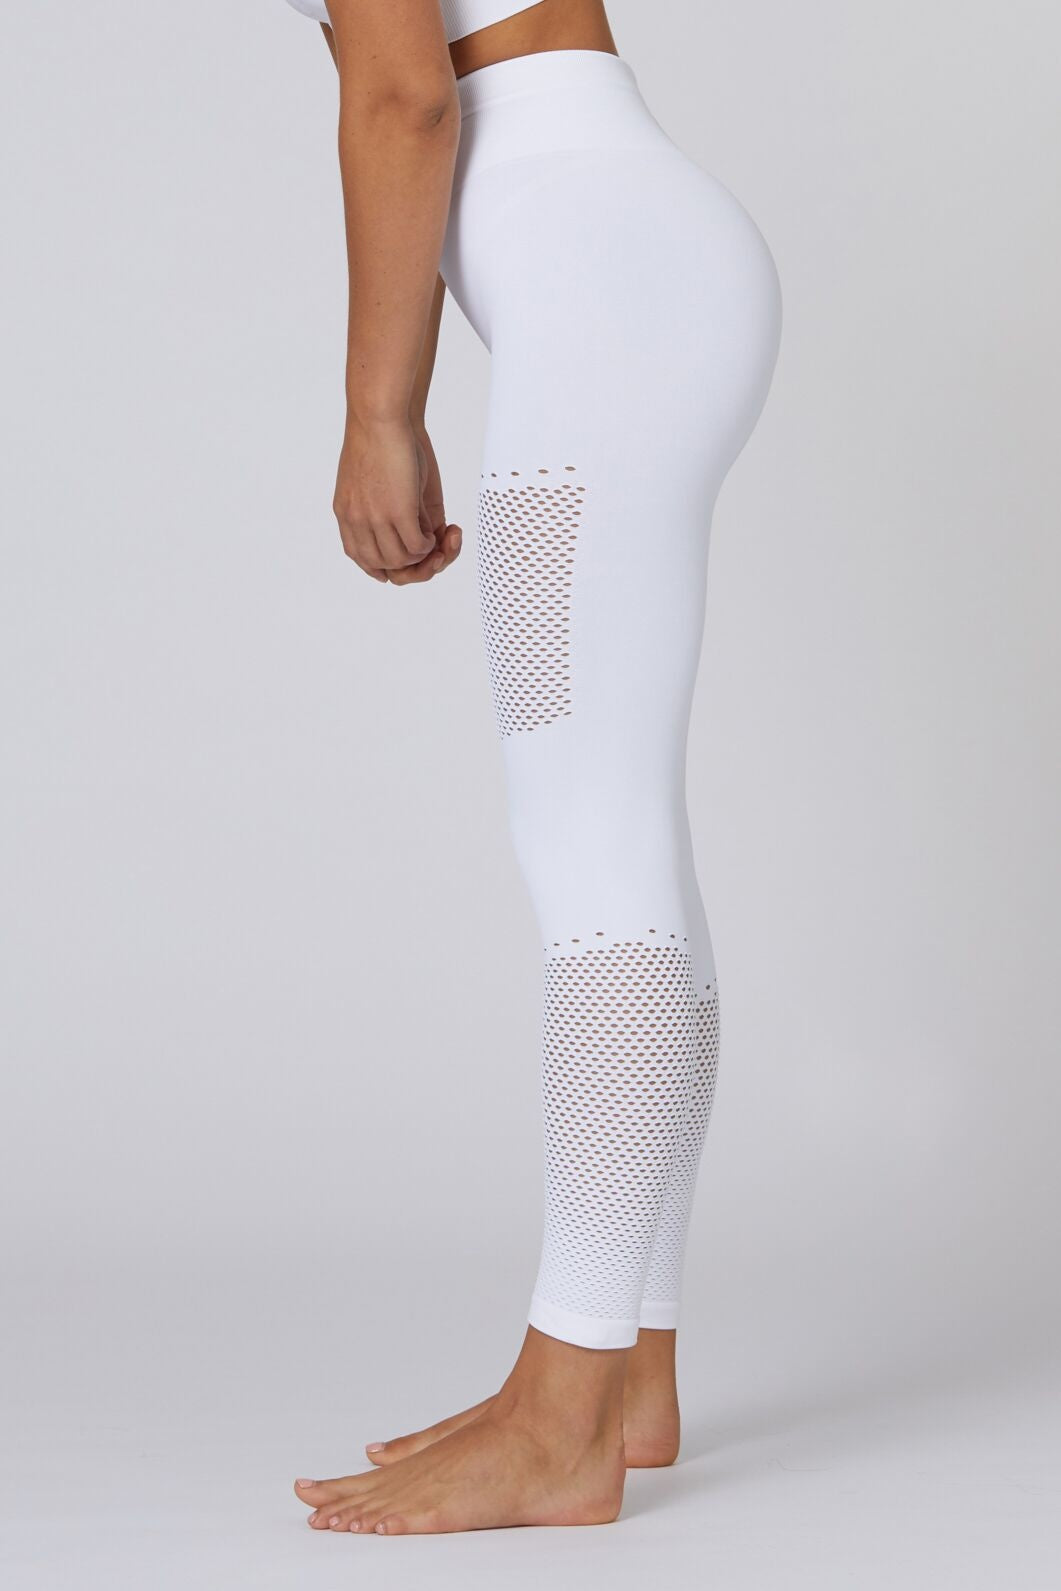 Nike Women's Dri-FIT Power 7/8 Yoga Training Tights Leggings White Size XXL  : Amazon.in: Clothing & Accessories